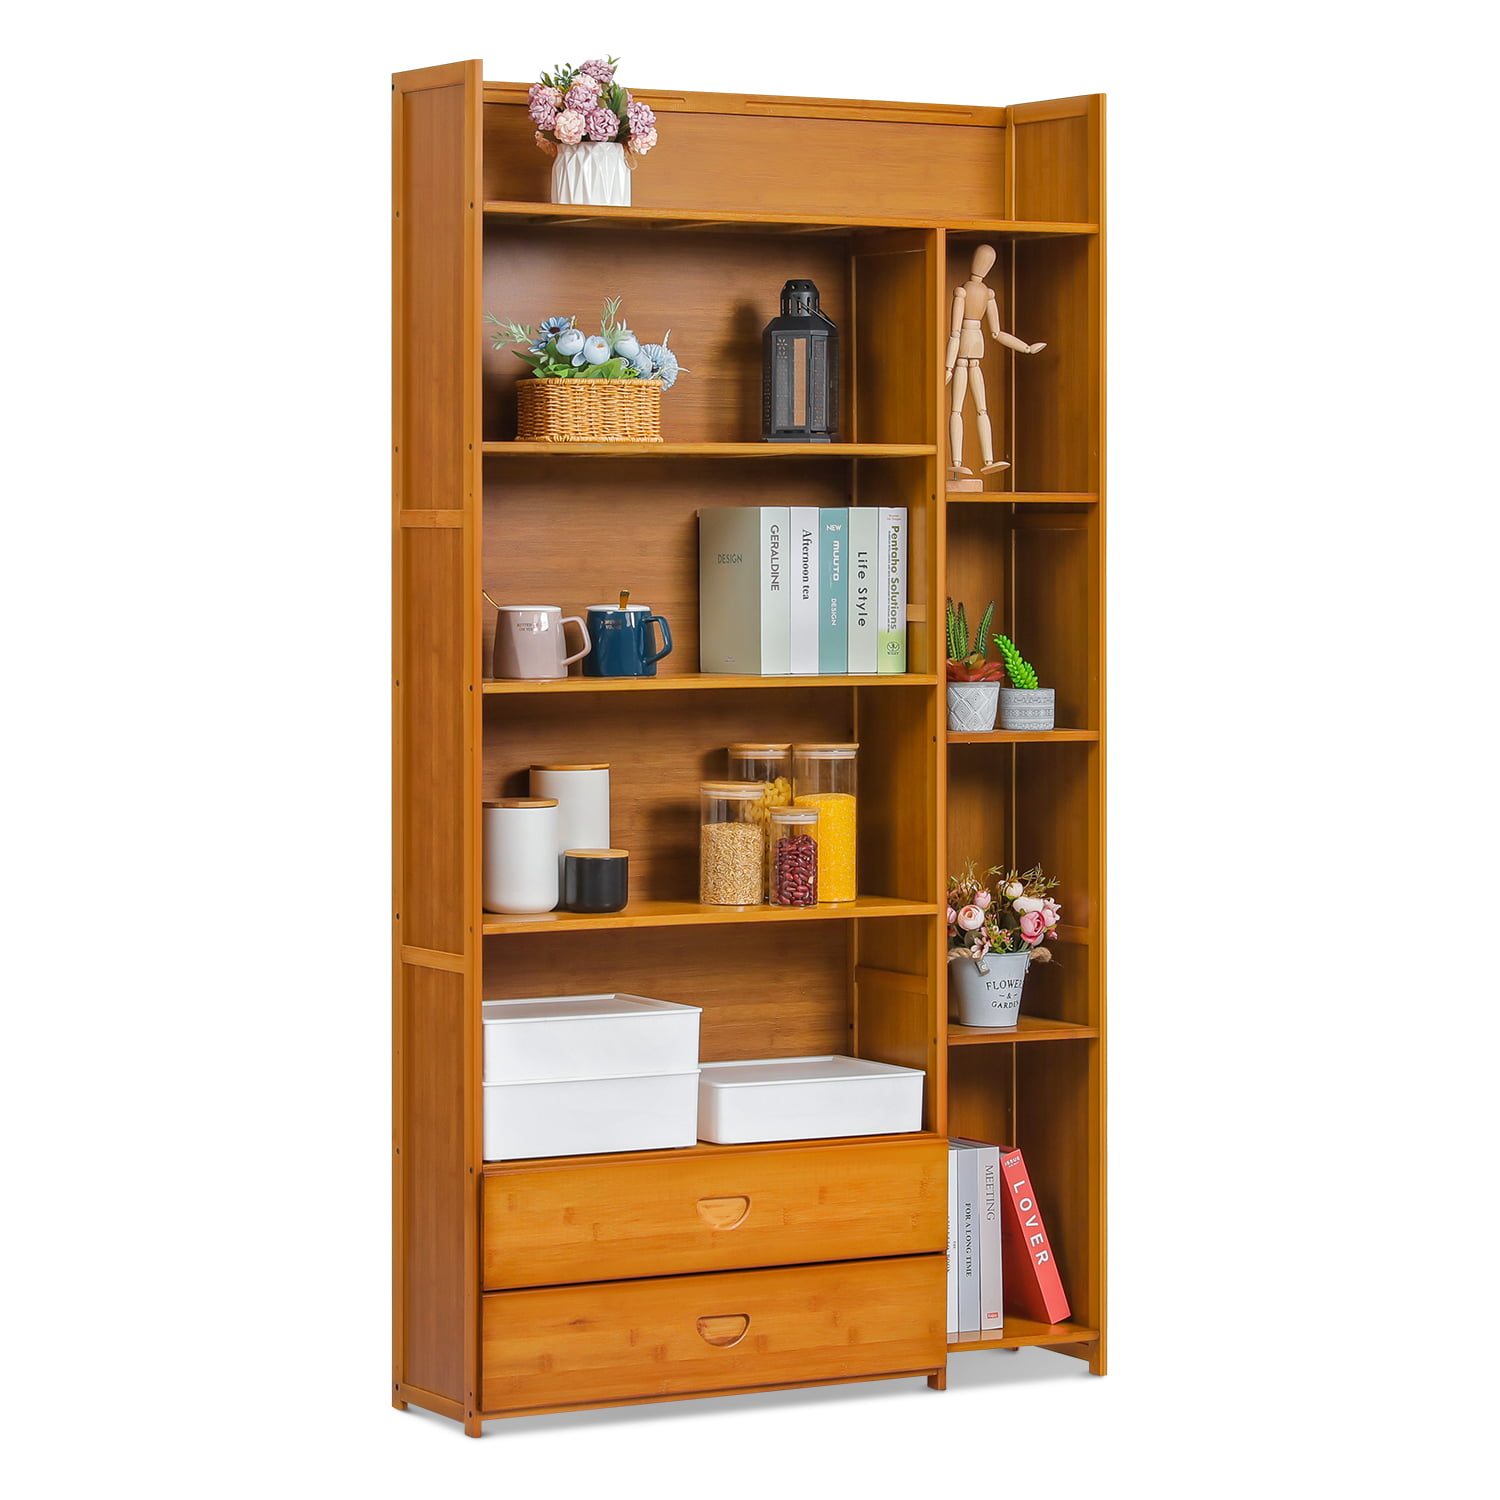 3 Tier Modern Bookshelf Wooden Storage, Argos Home Maine 2 Shelf Small Bookcase Oak Effect